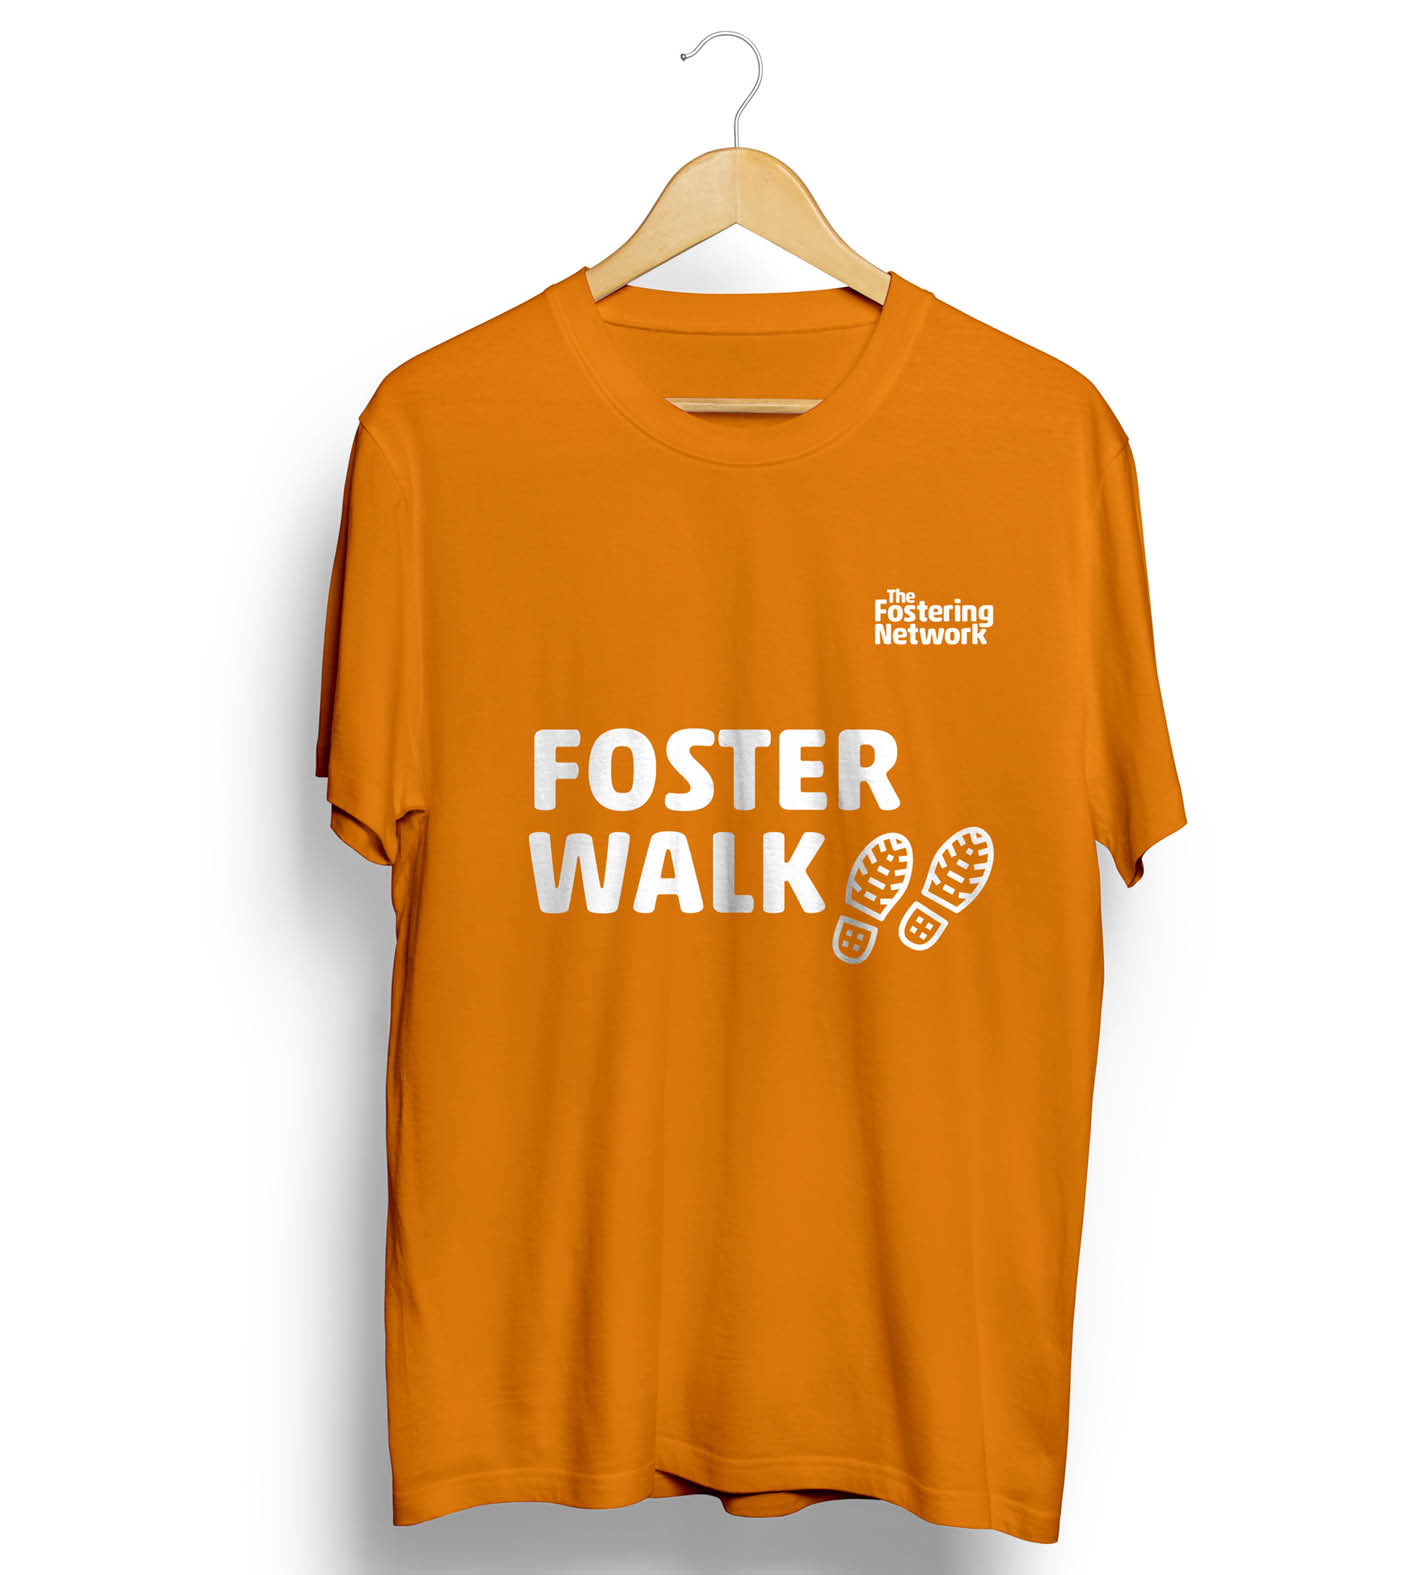 Foster Walk t-shirt YOUTH 9-11